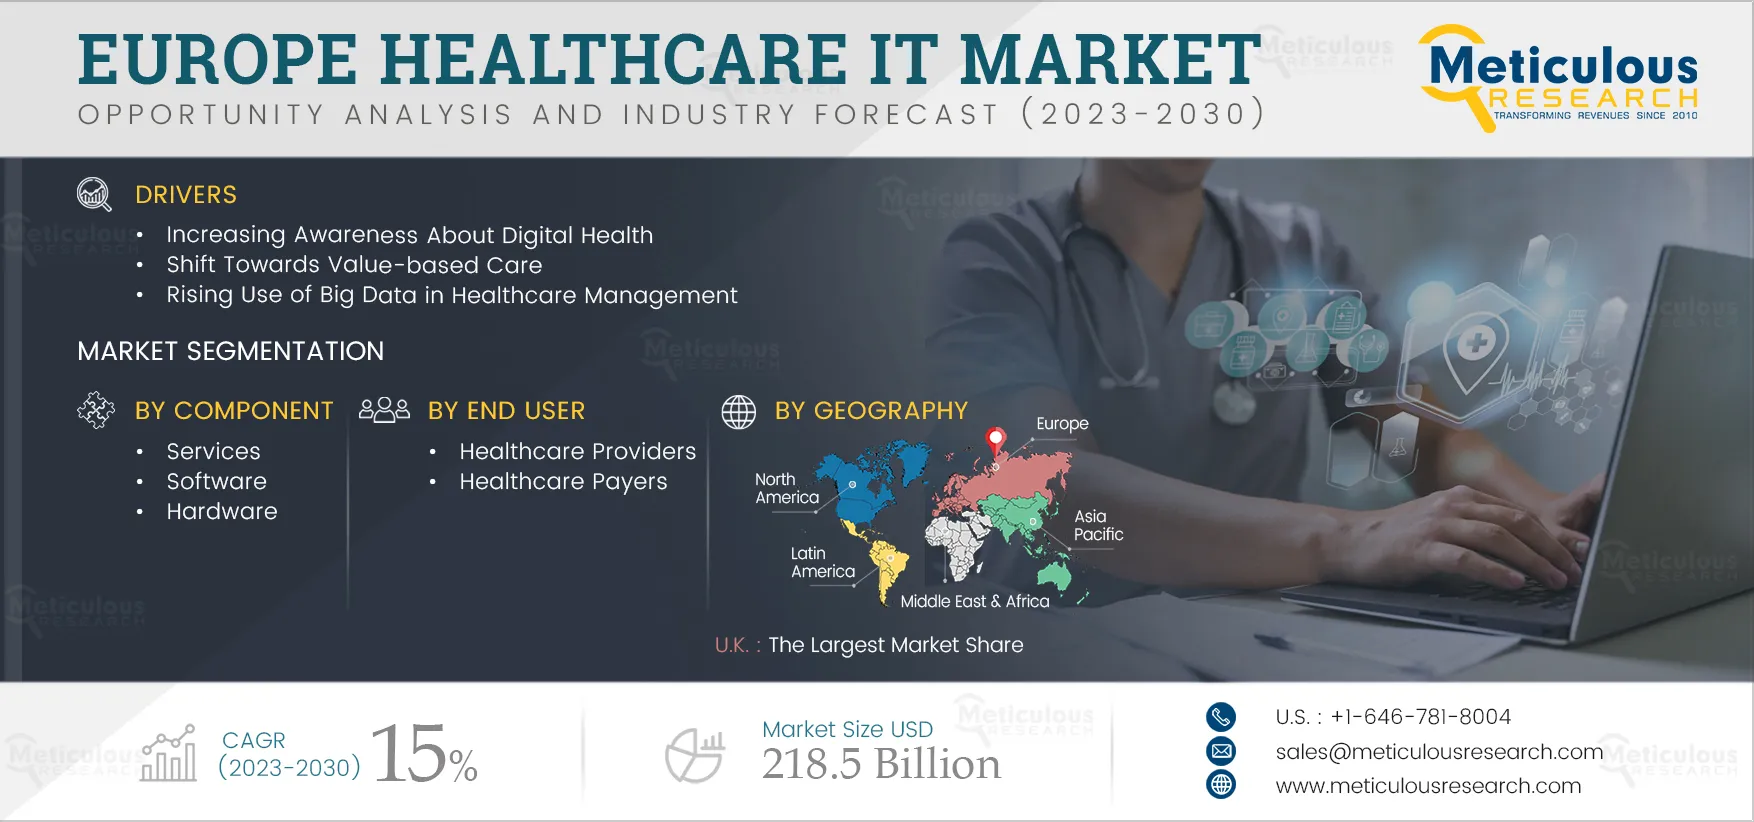 Europe Healthcare IT Market 